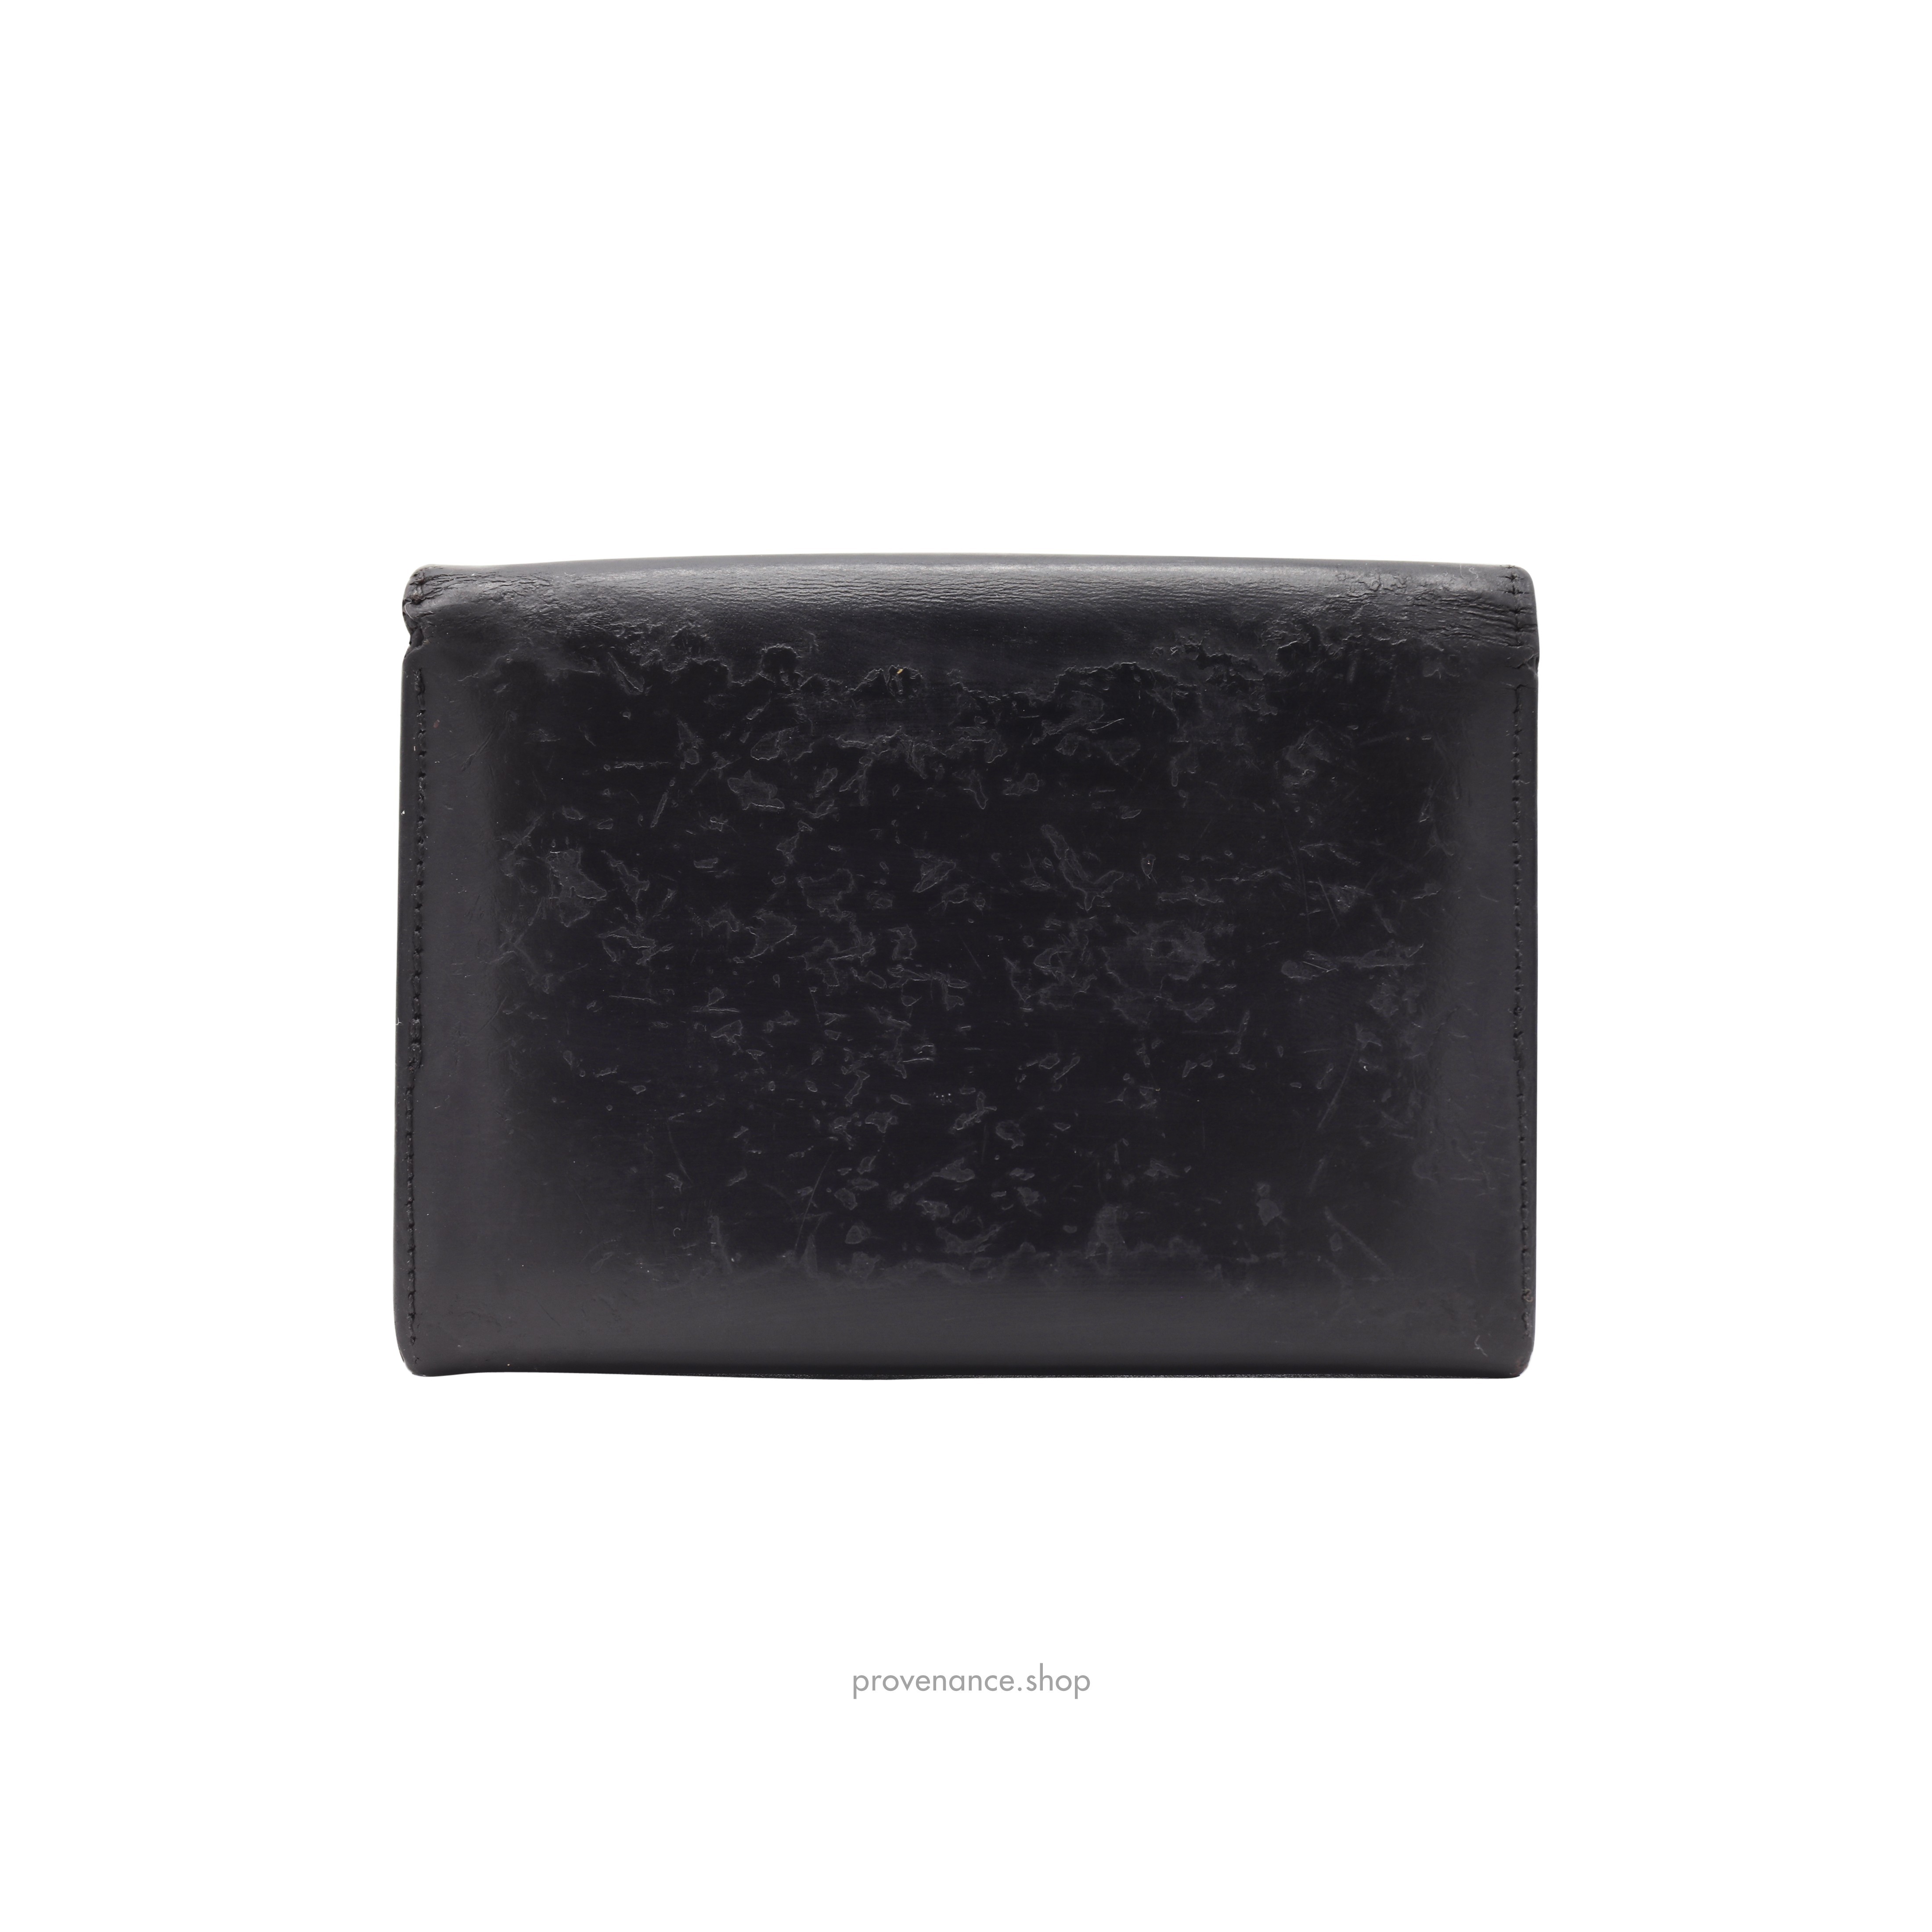 Cartier Pocket Organizer Wallet - Black Leather - 2